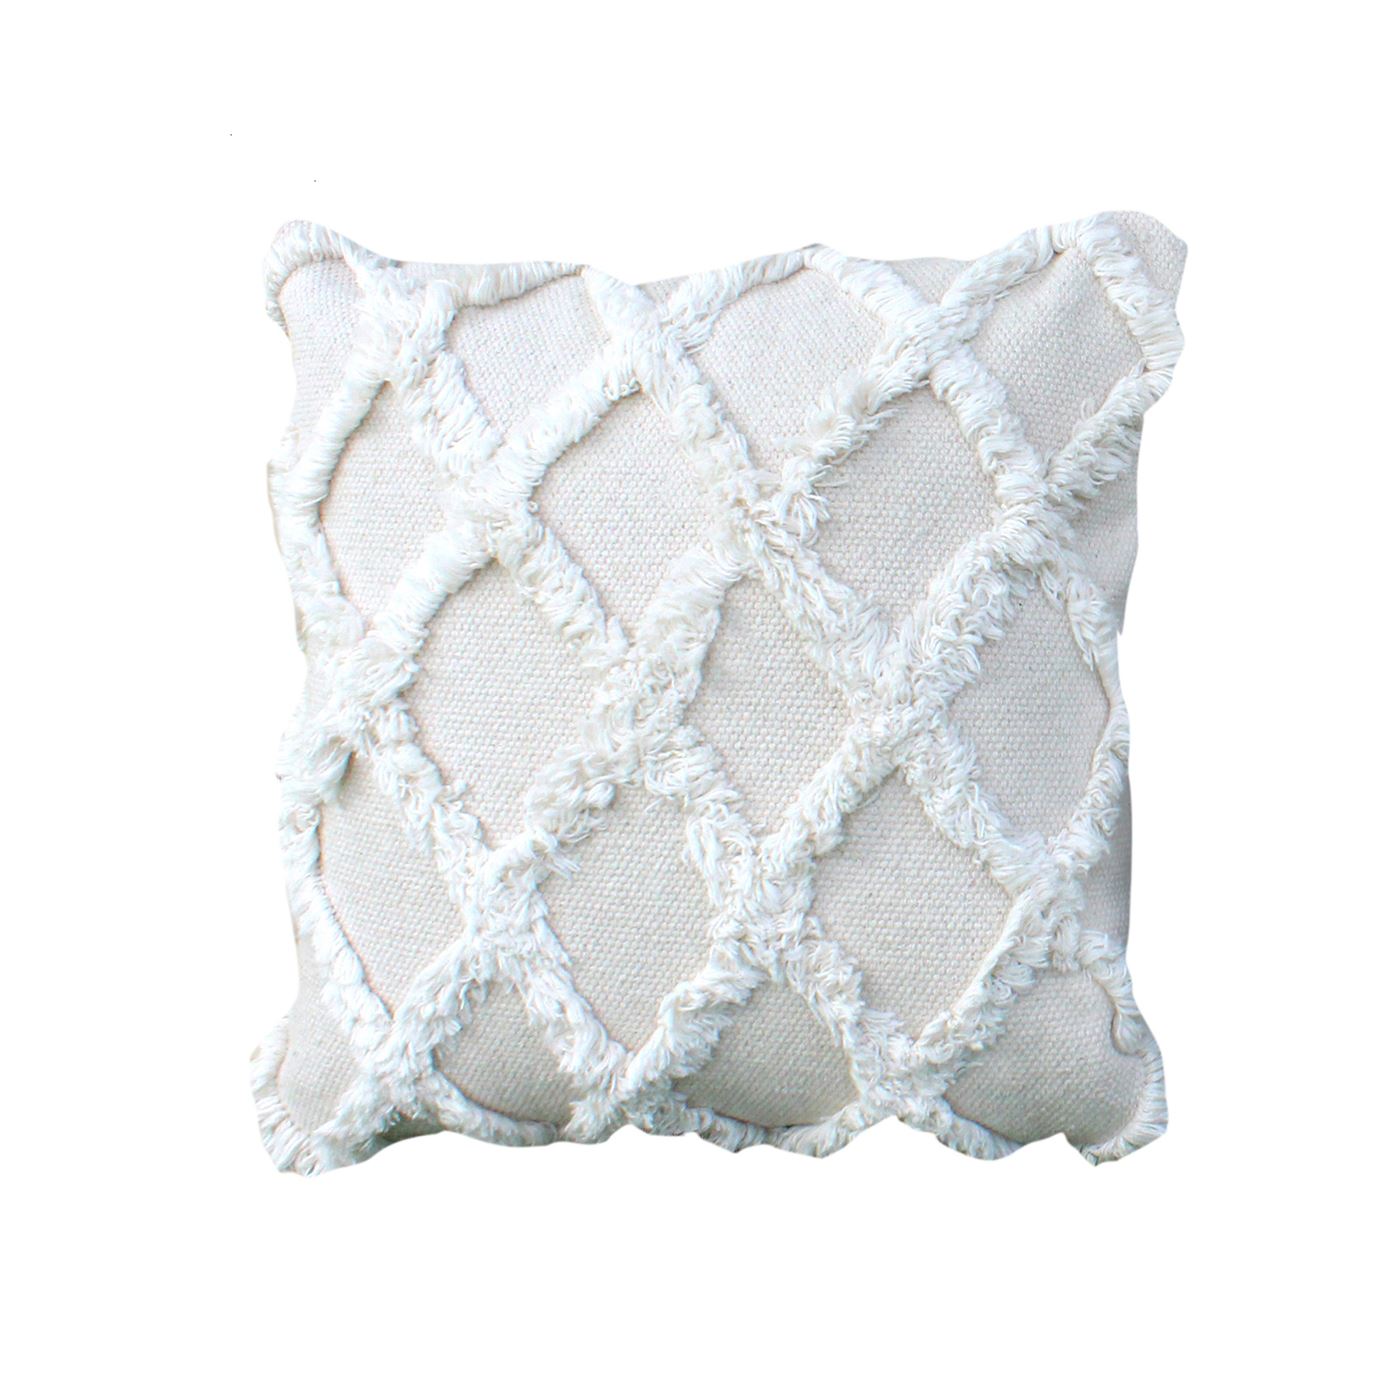 Cambrian Pillow, Cotton, Natural White, Bm Sn, All Cut 